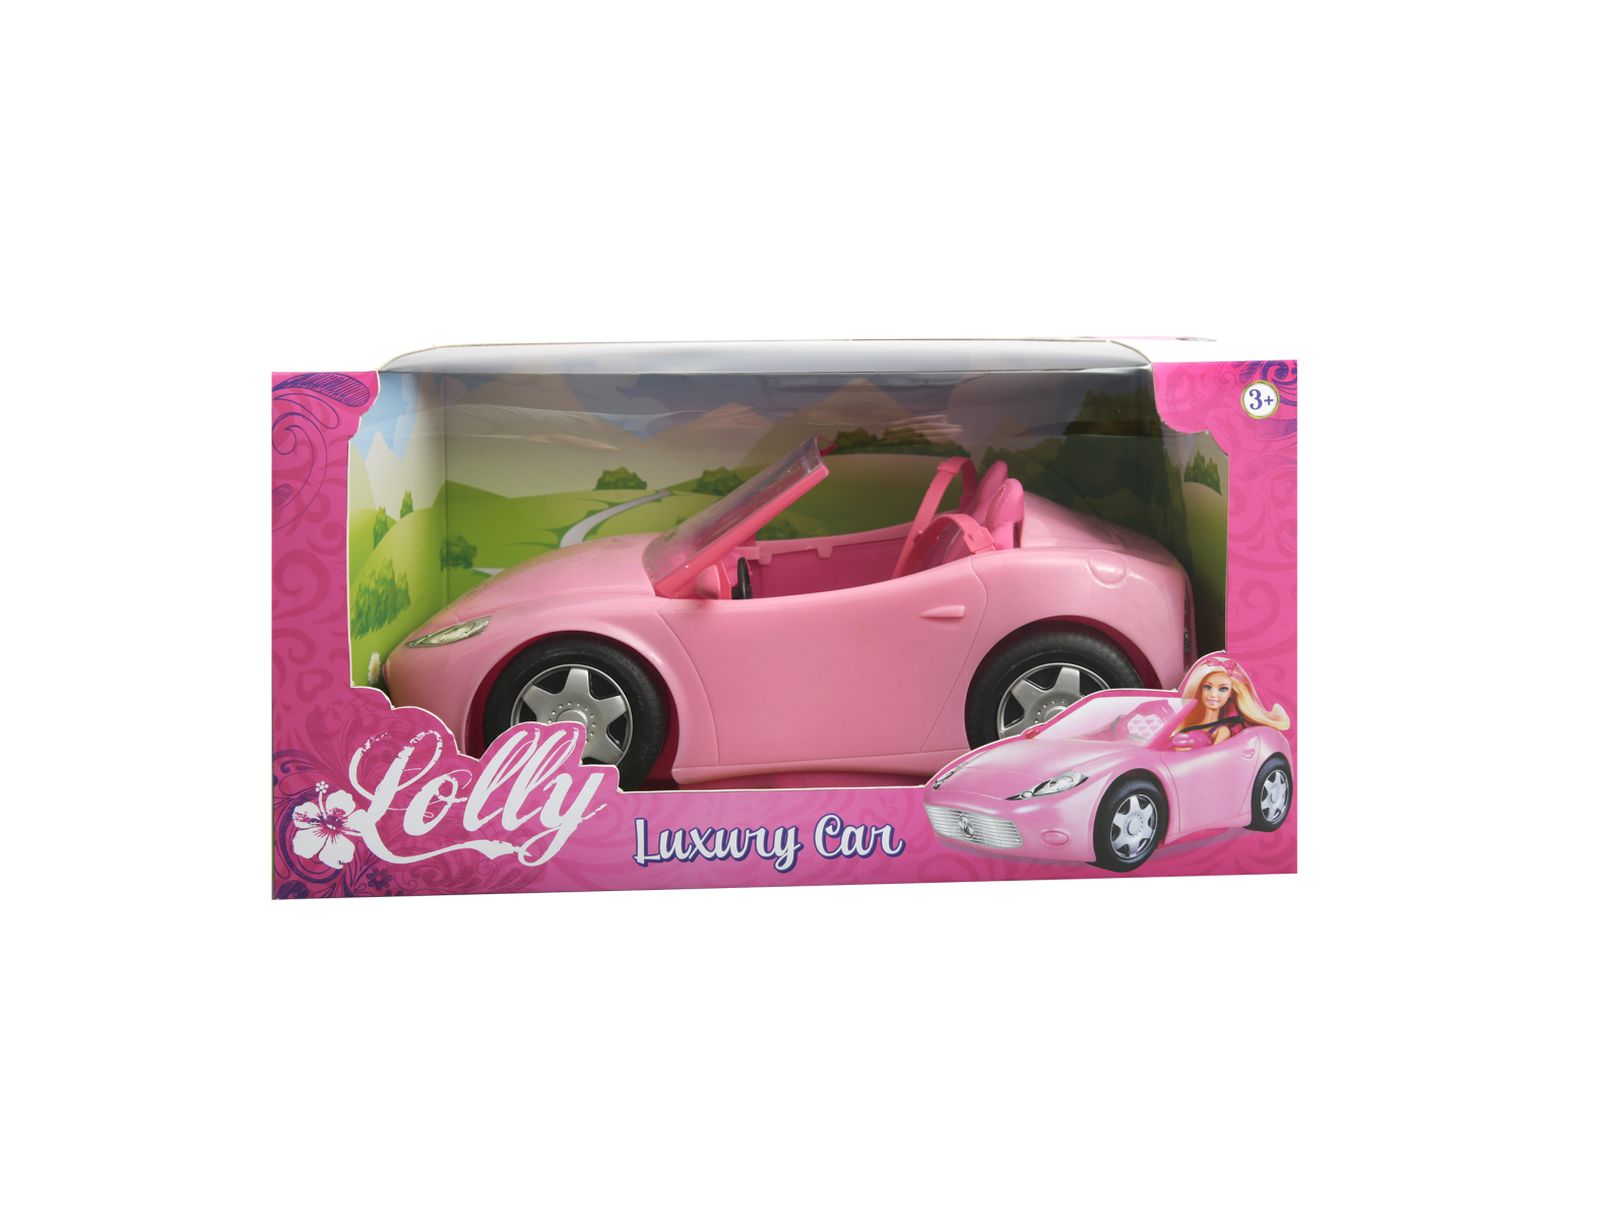 Lolly luxury car - LOLLY